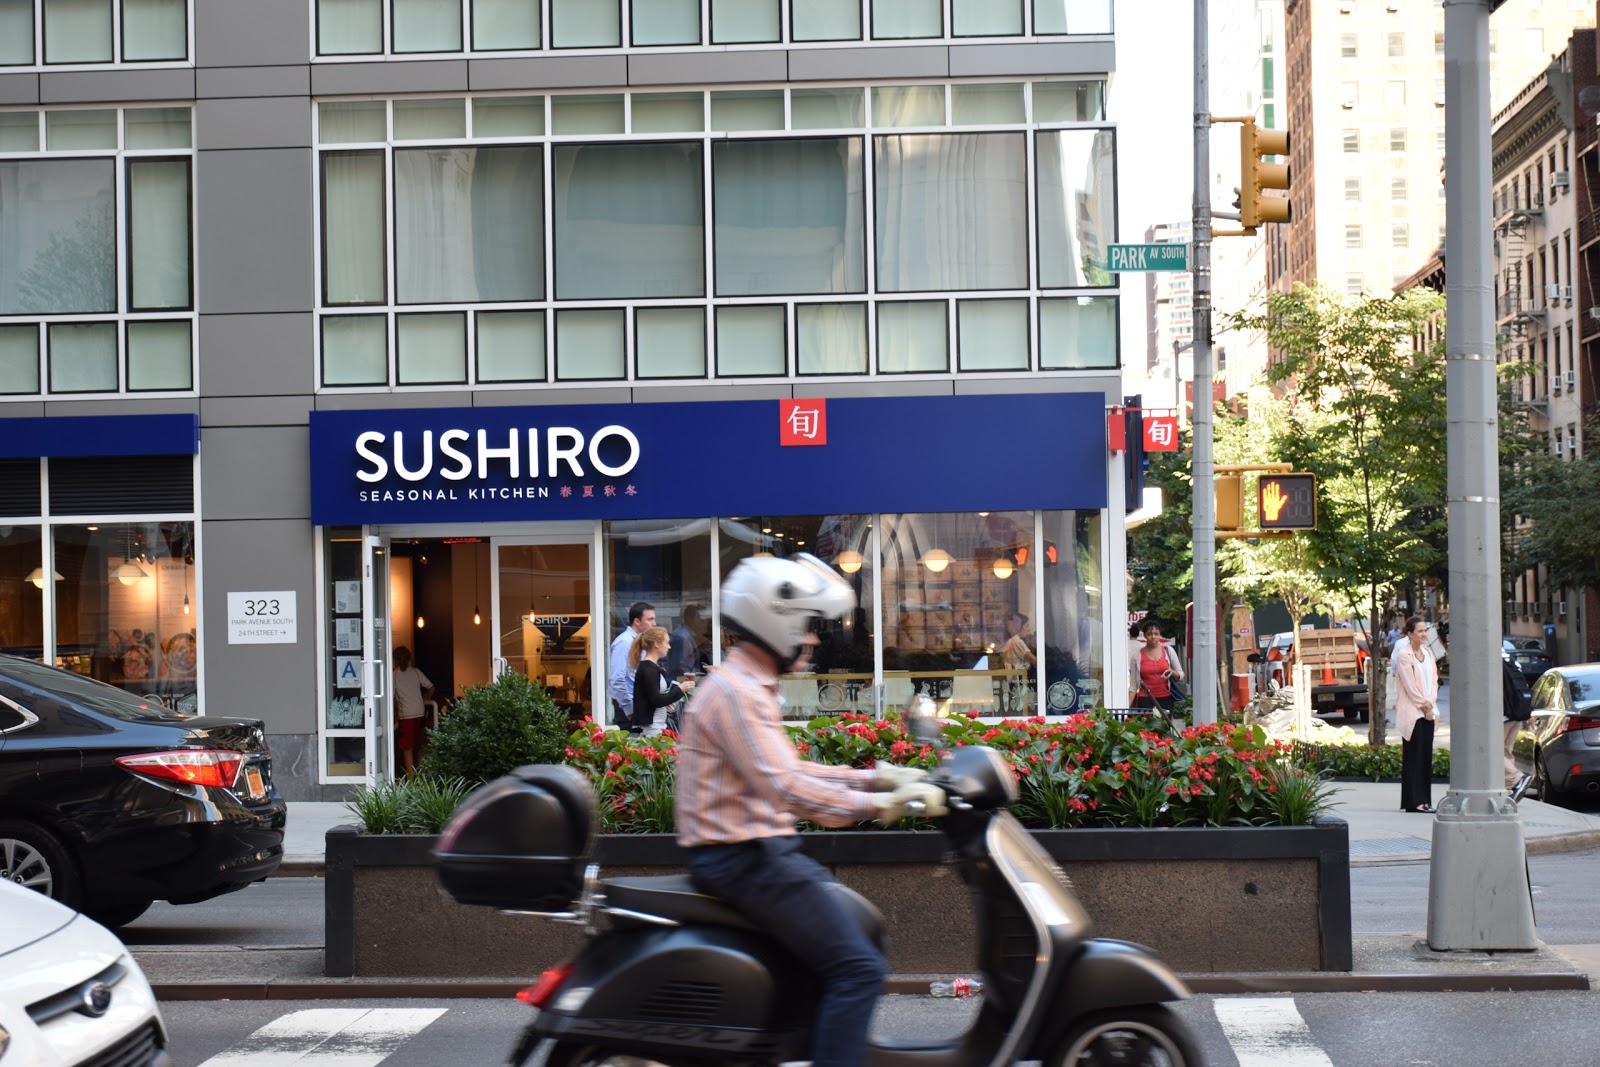 Photo of Sushiro Seasonal Kitchen in New York City, New York, United States - 4 Picture of Restaurant, Food, Point of interest, Establishment